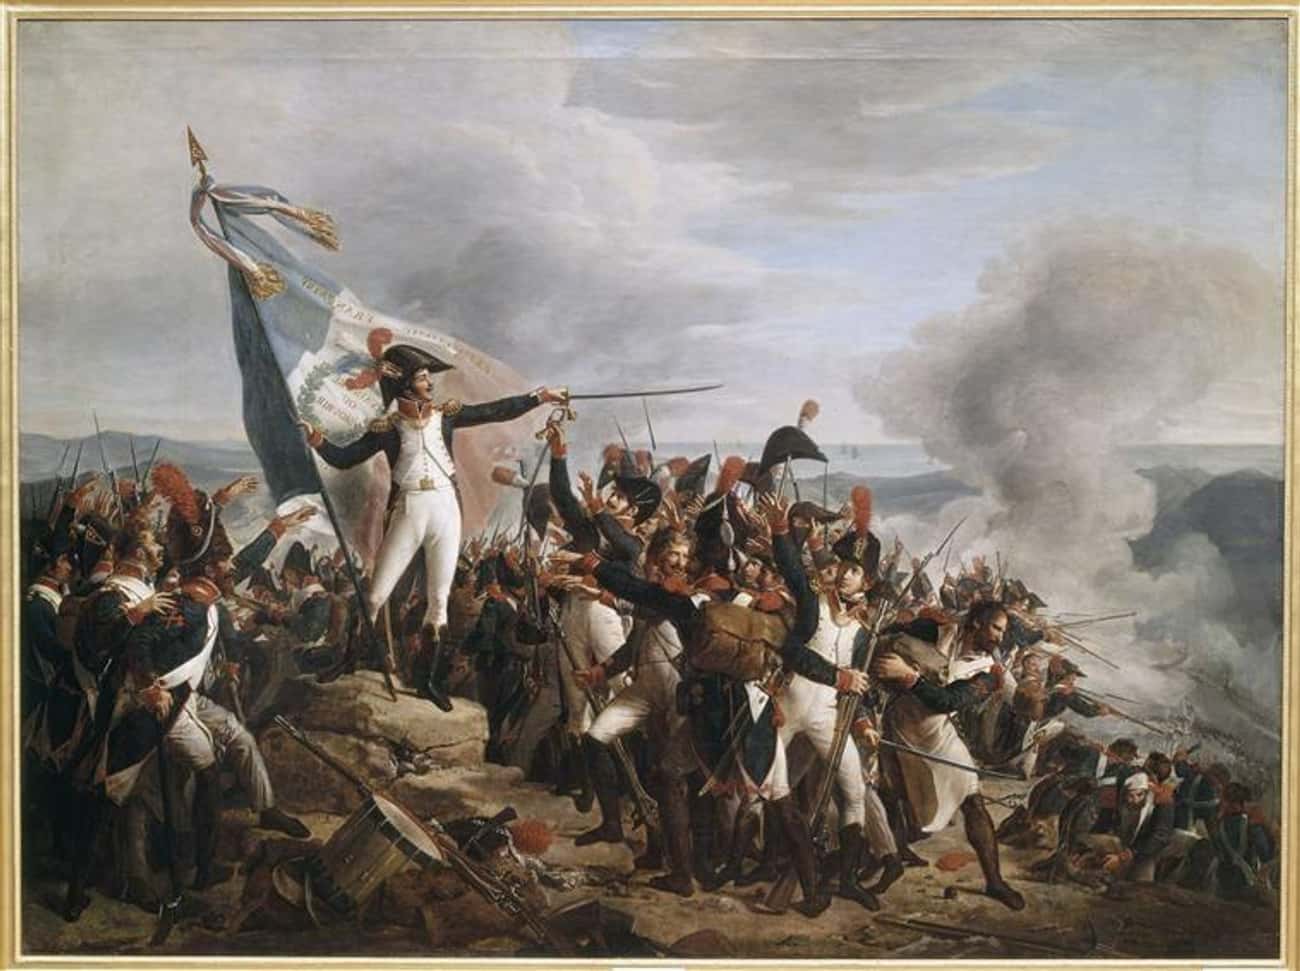 Итальянский поход наполеона бонапарта дата. Наполеон Бонапарт 1796. Итальянская кампания Наполеона 1796-1797. Картина битва у Монтенотте. Битва при Лоди 1796 Наполеон.